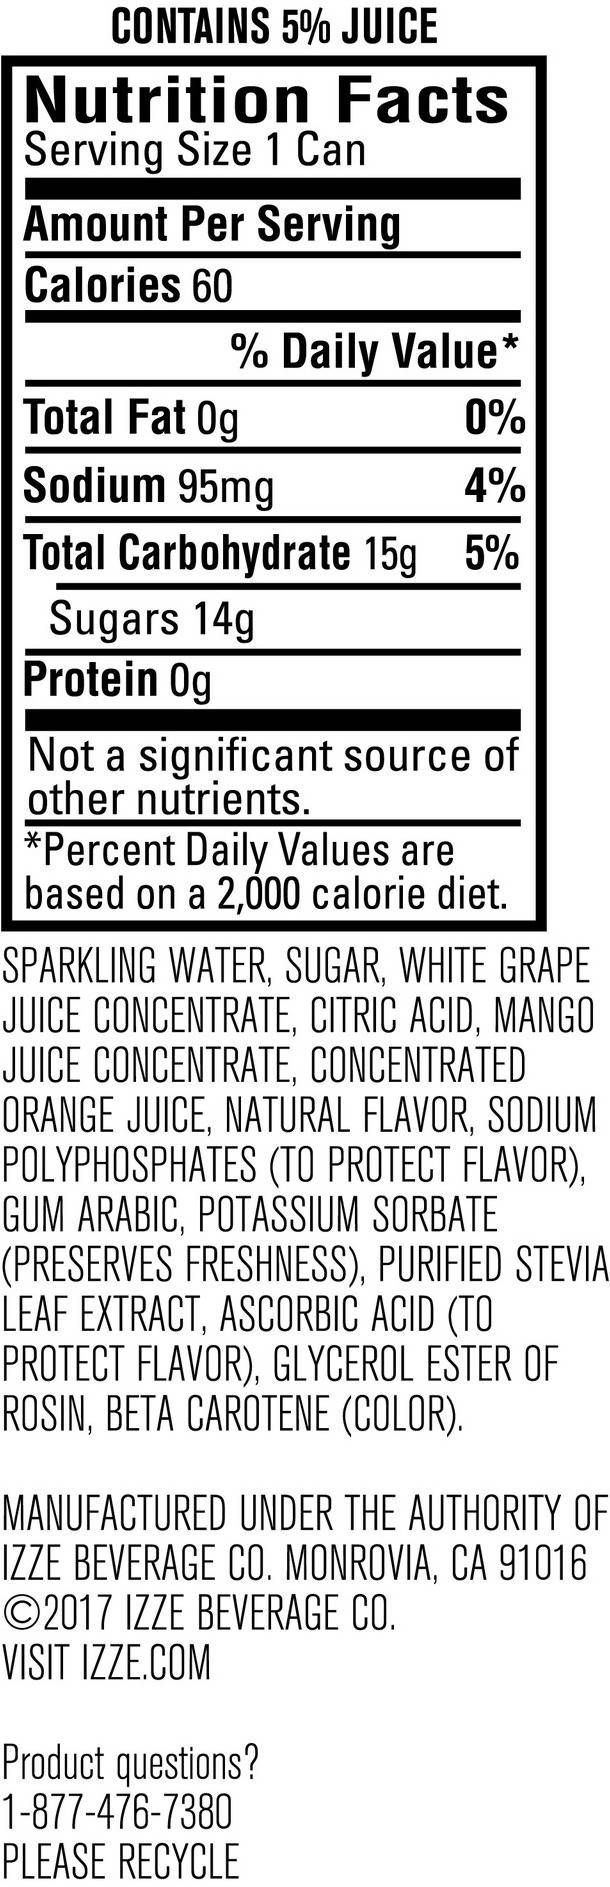 Image describing nutrition information for product IZZE Fusion Orange Mango